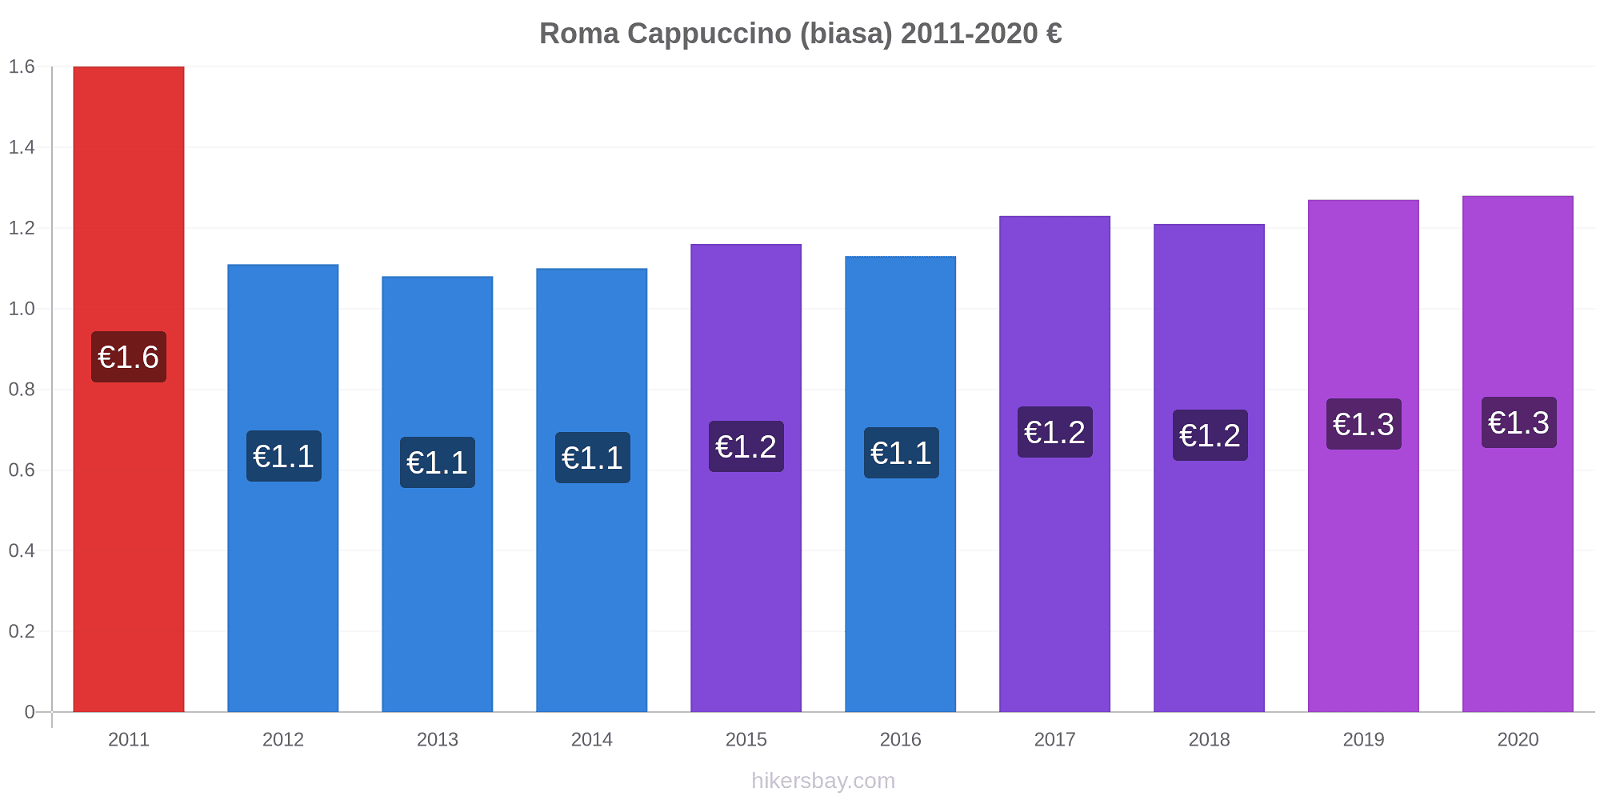 Roma perubahan harga Cappuccino (biasa) hikersbay.com